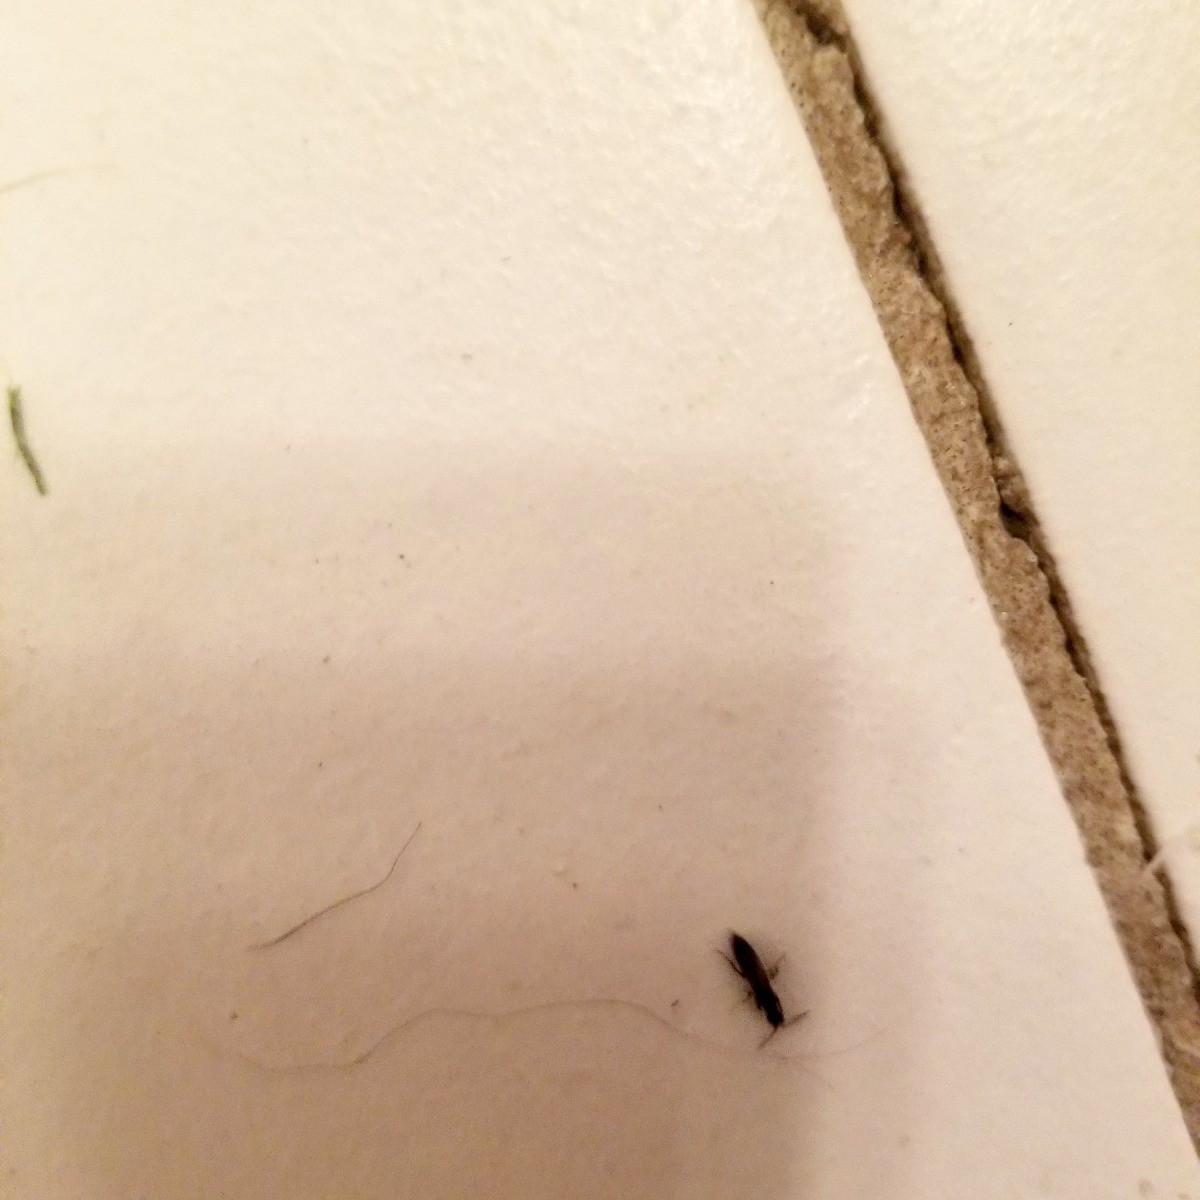 small black bugs